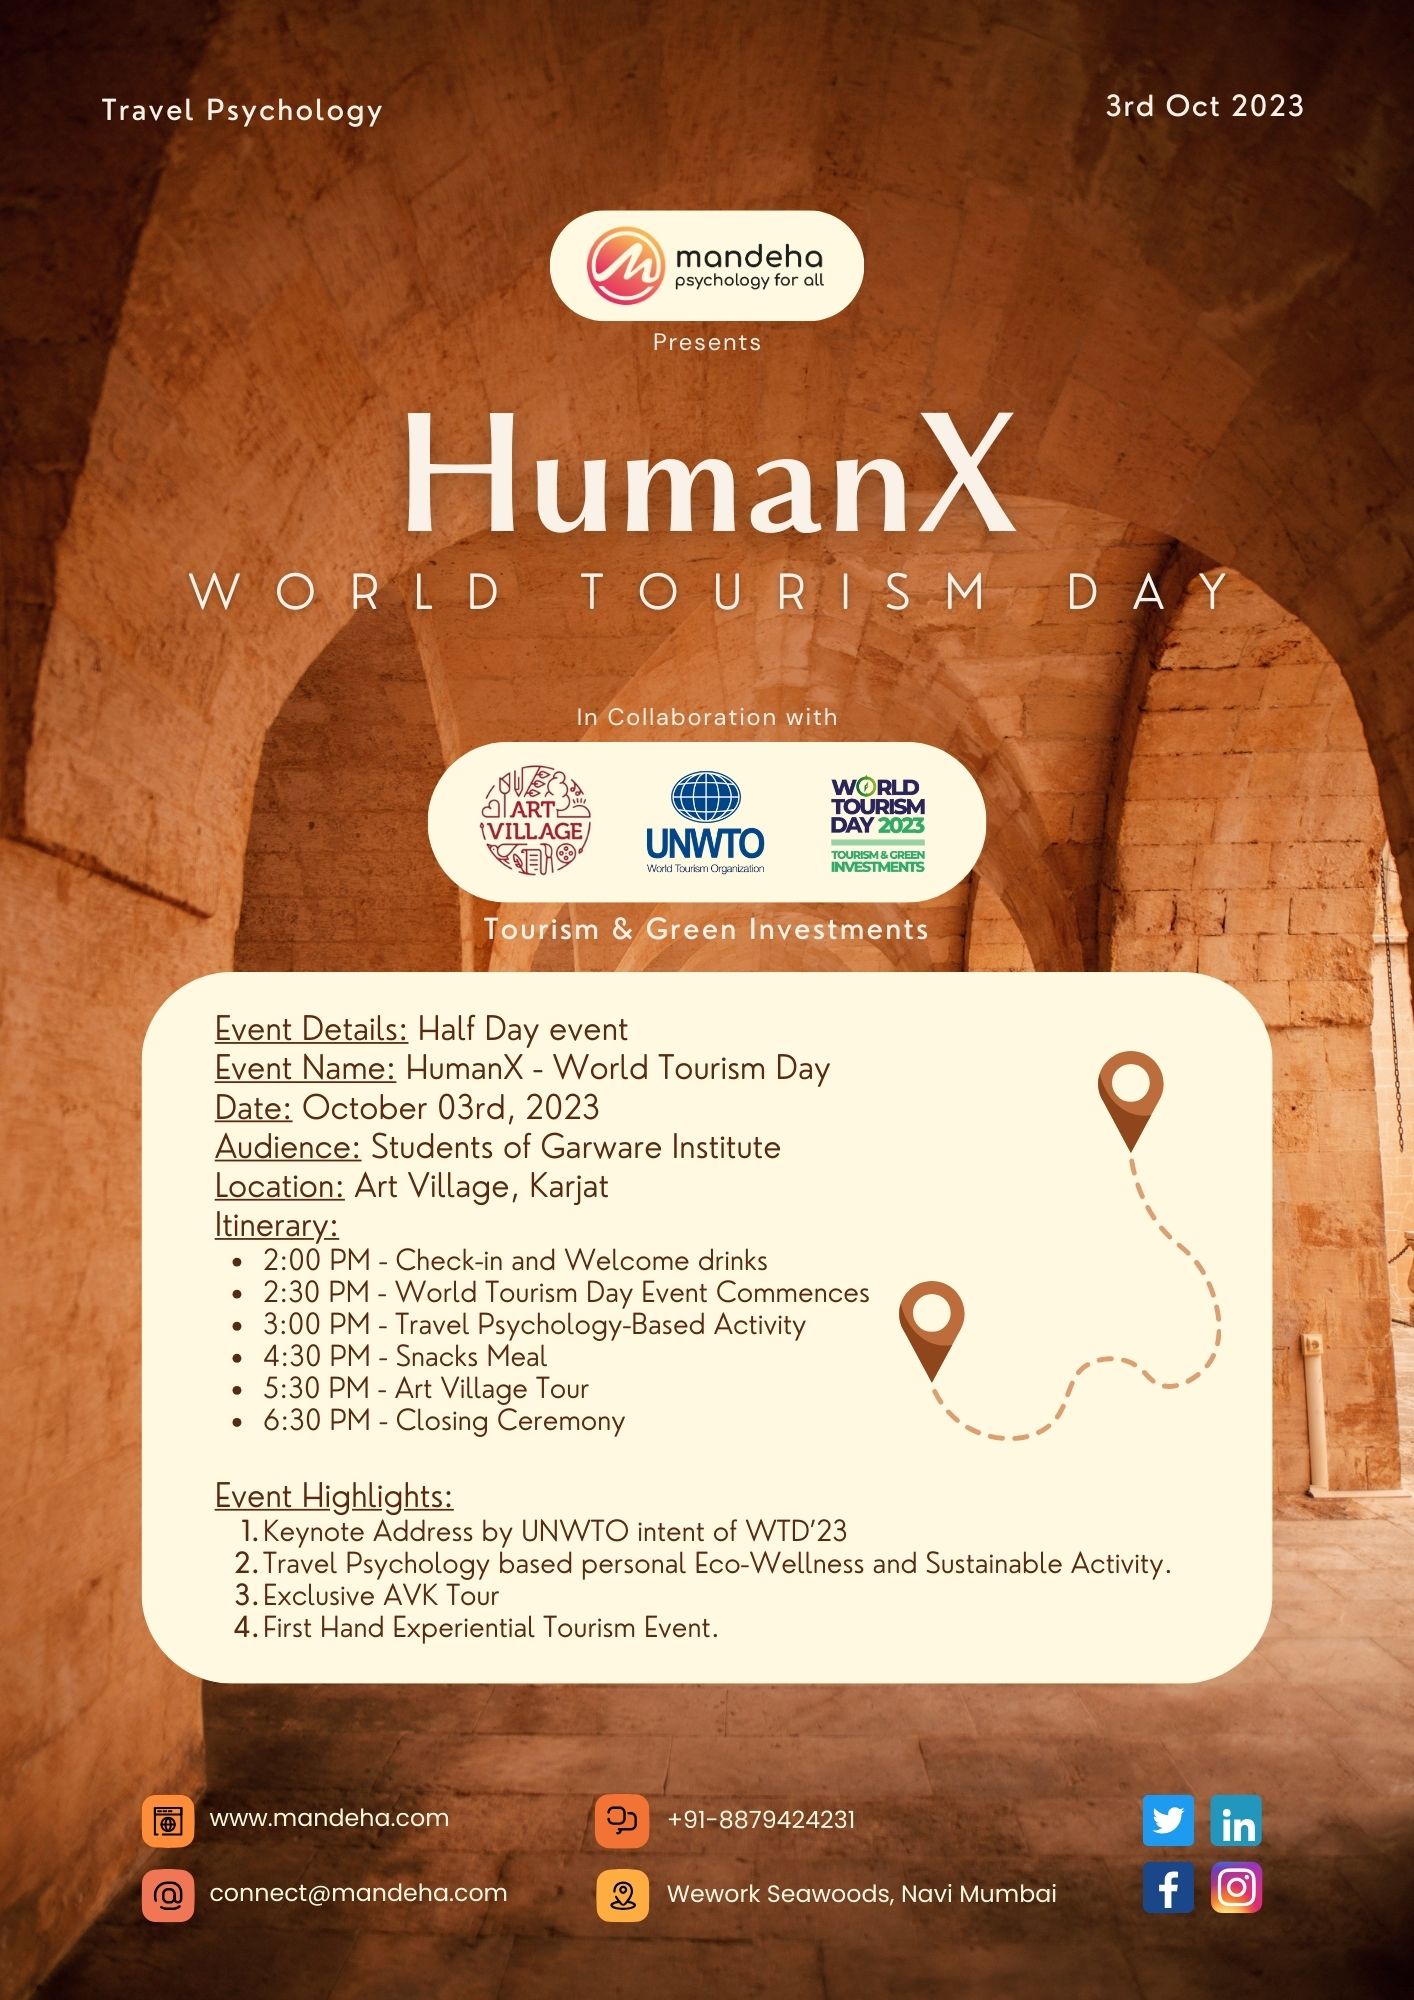 HumanX - World Tourism Day